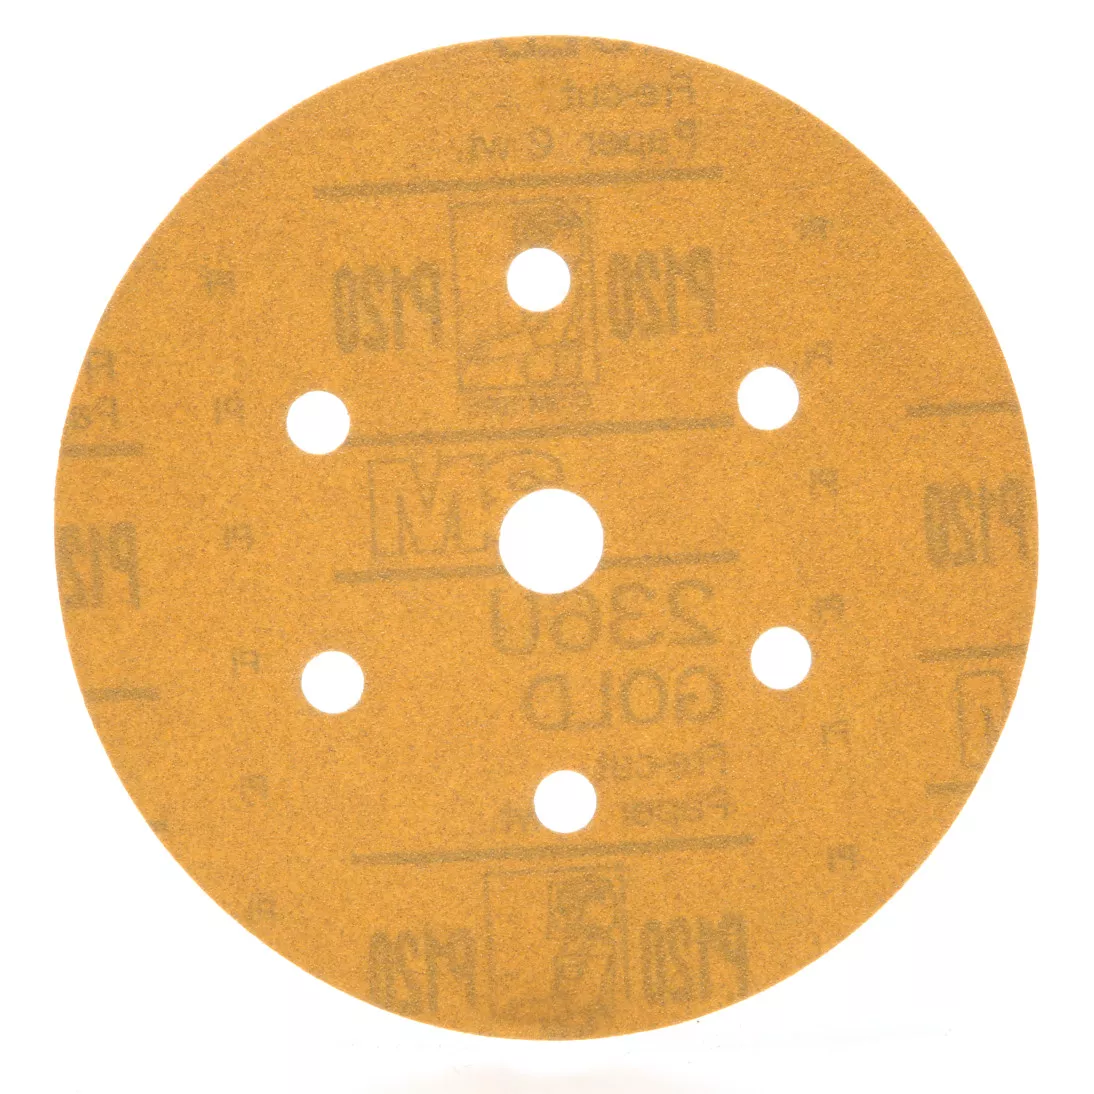 3M™ Hookit™ Gold Disc Dust Free 236U, 01081, 6 in, P120, 100 discs per
carton, 4 cartons per case